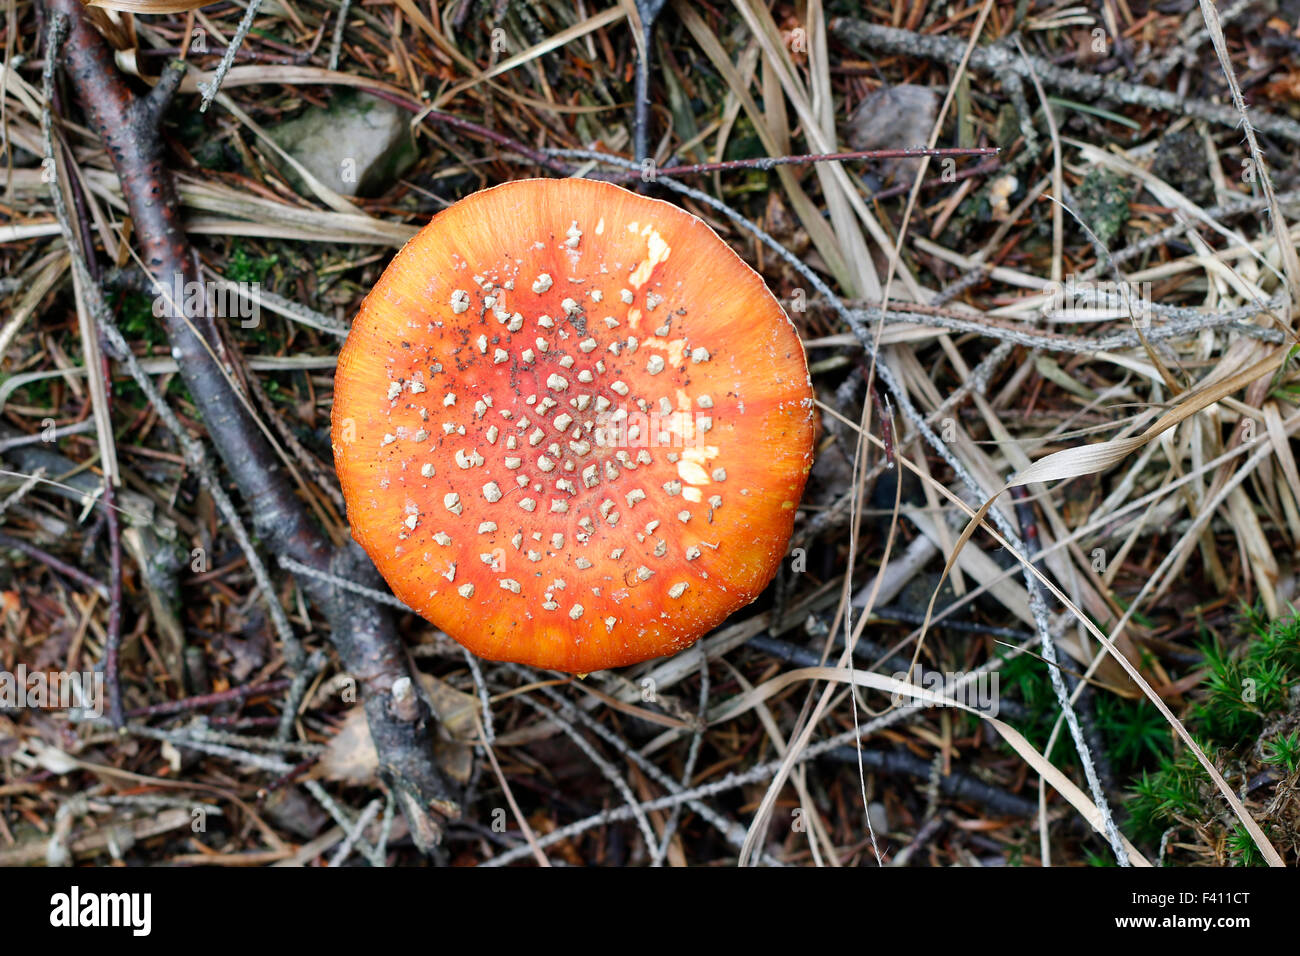 Amanita muscaria - poisonous mushroom Stock Photo